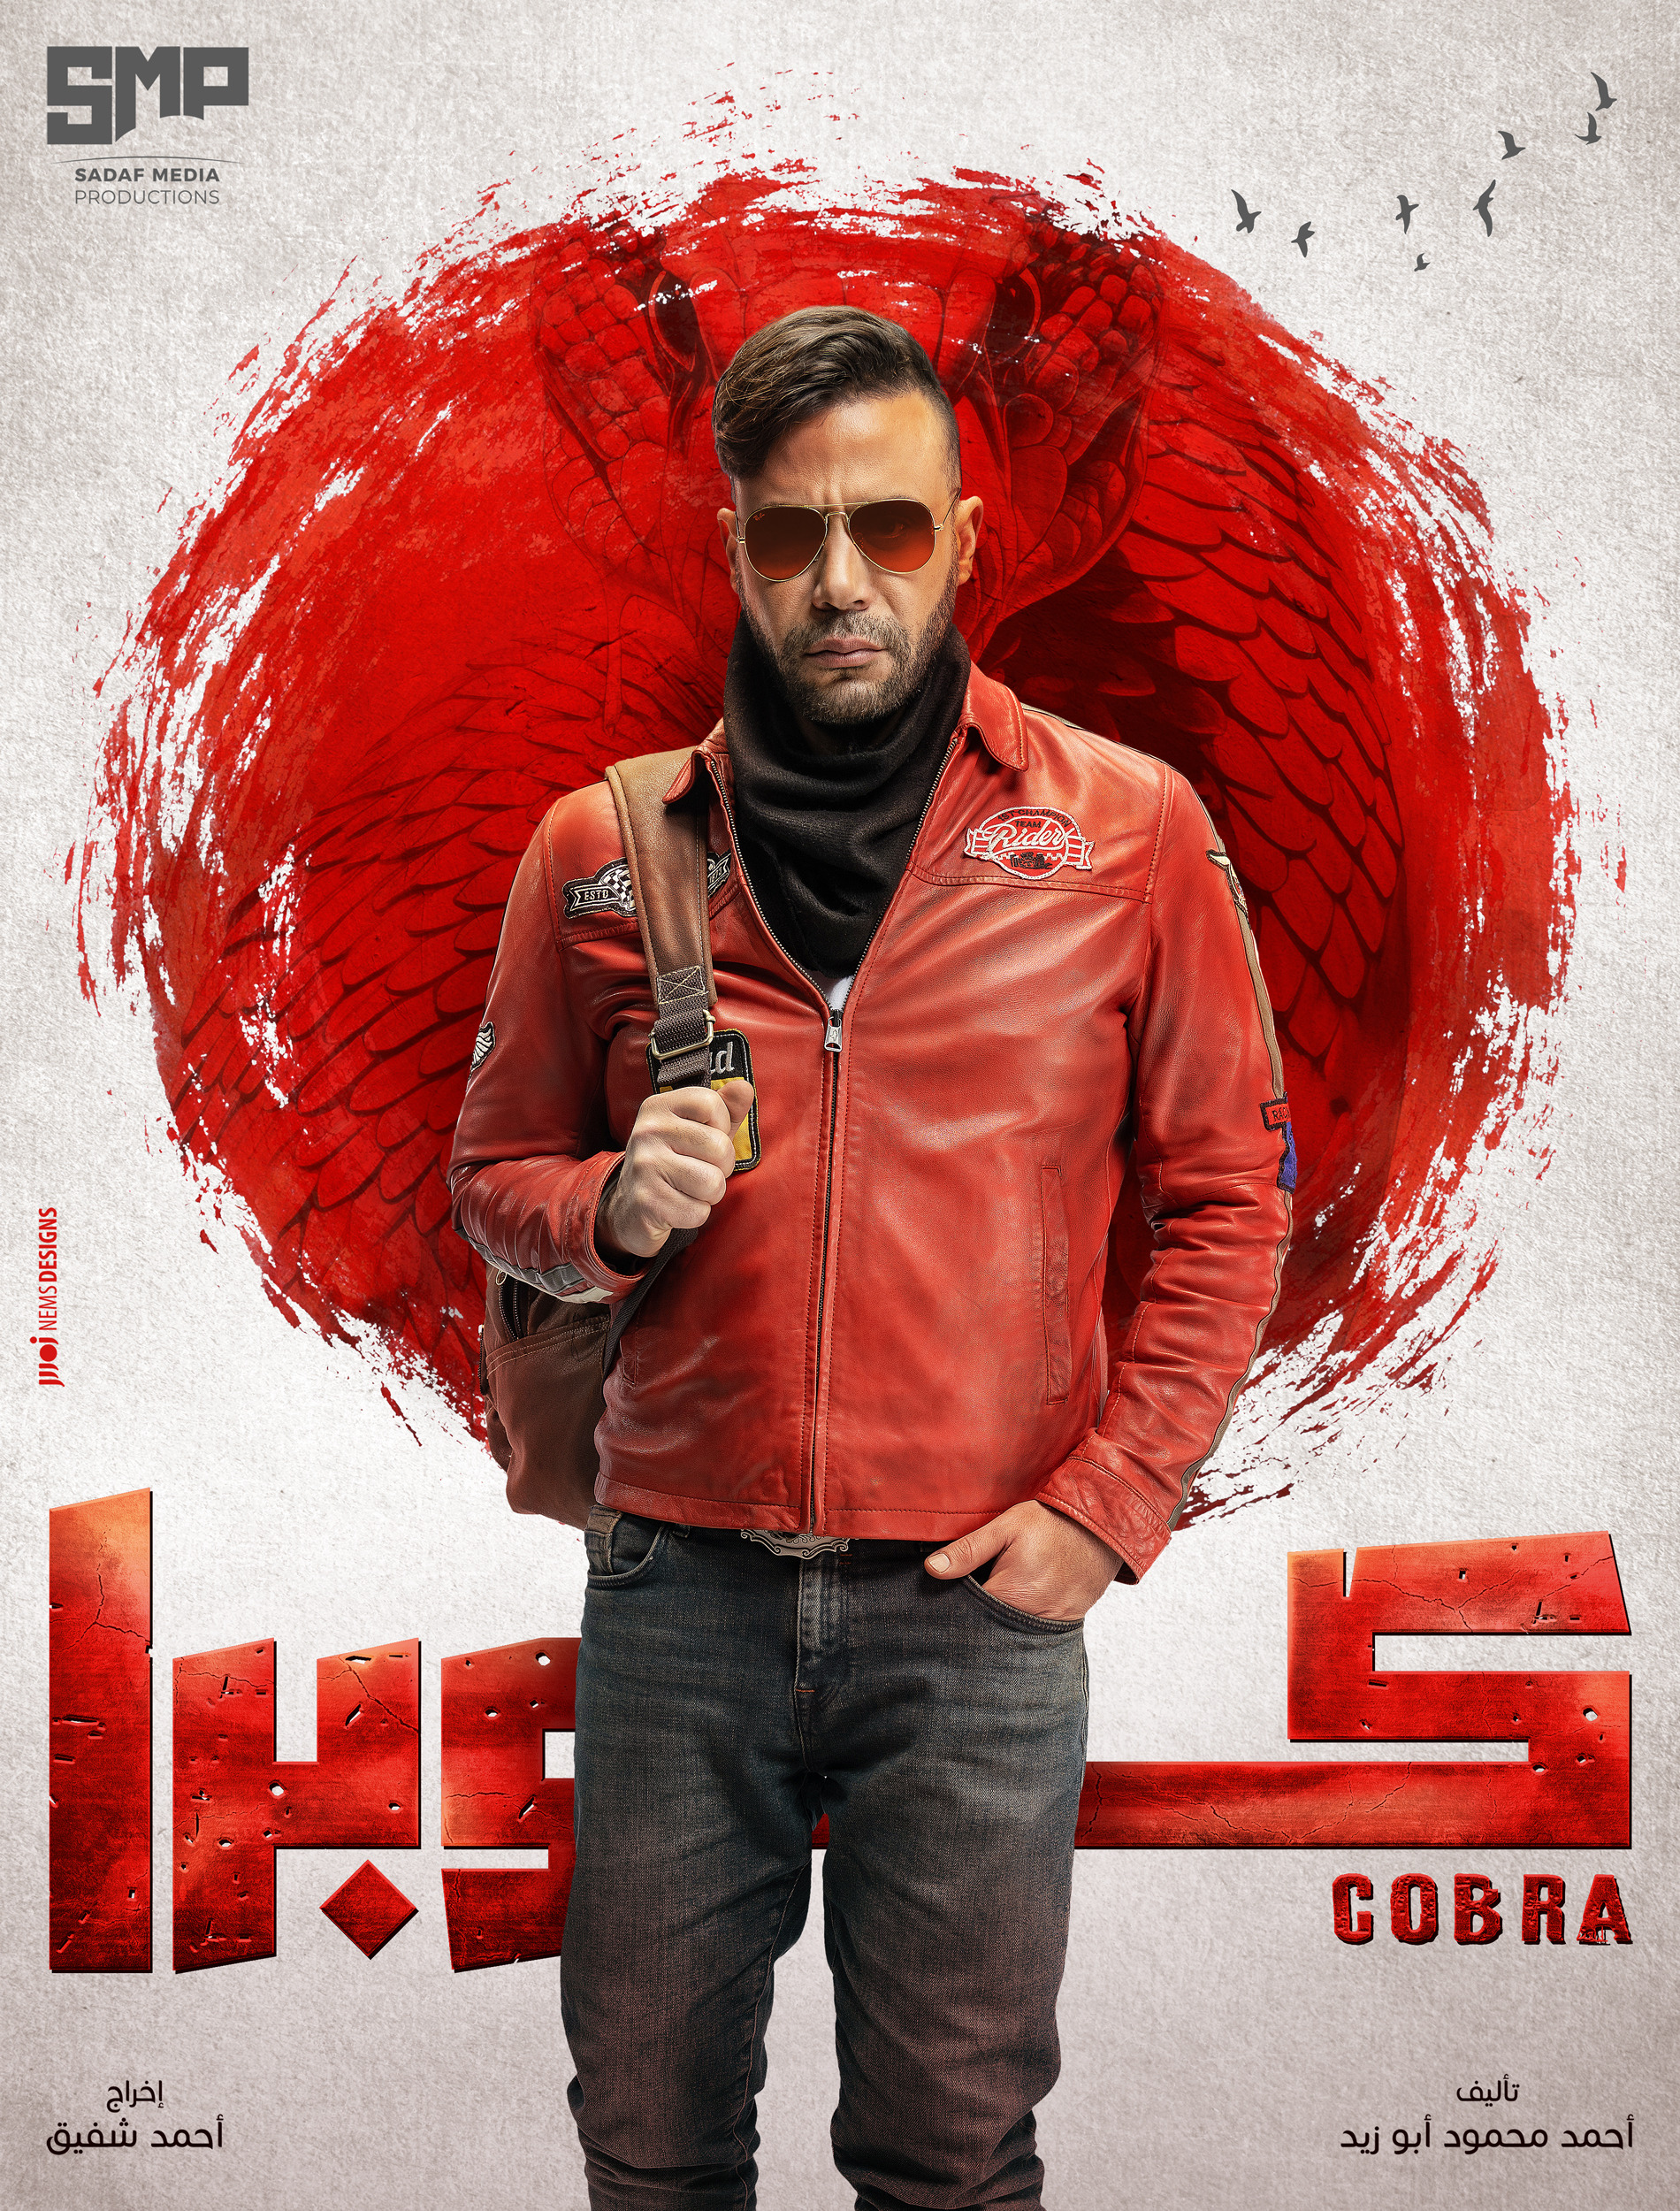 Mega Sized TV Poster Image for Cobra (#7 of 20)